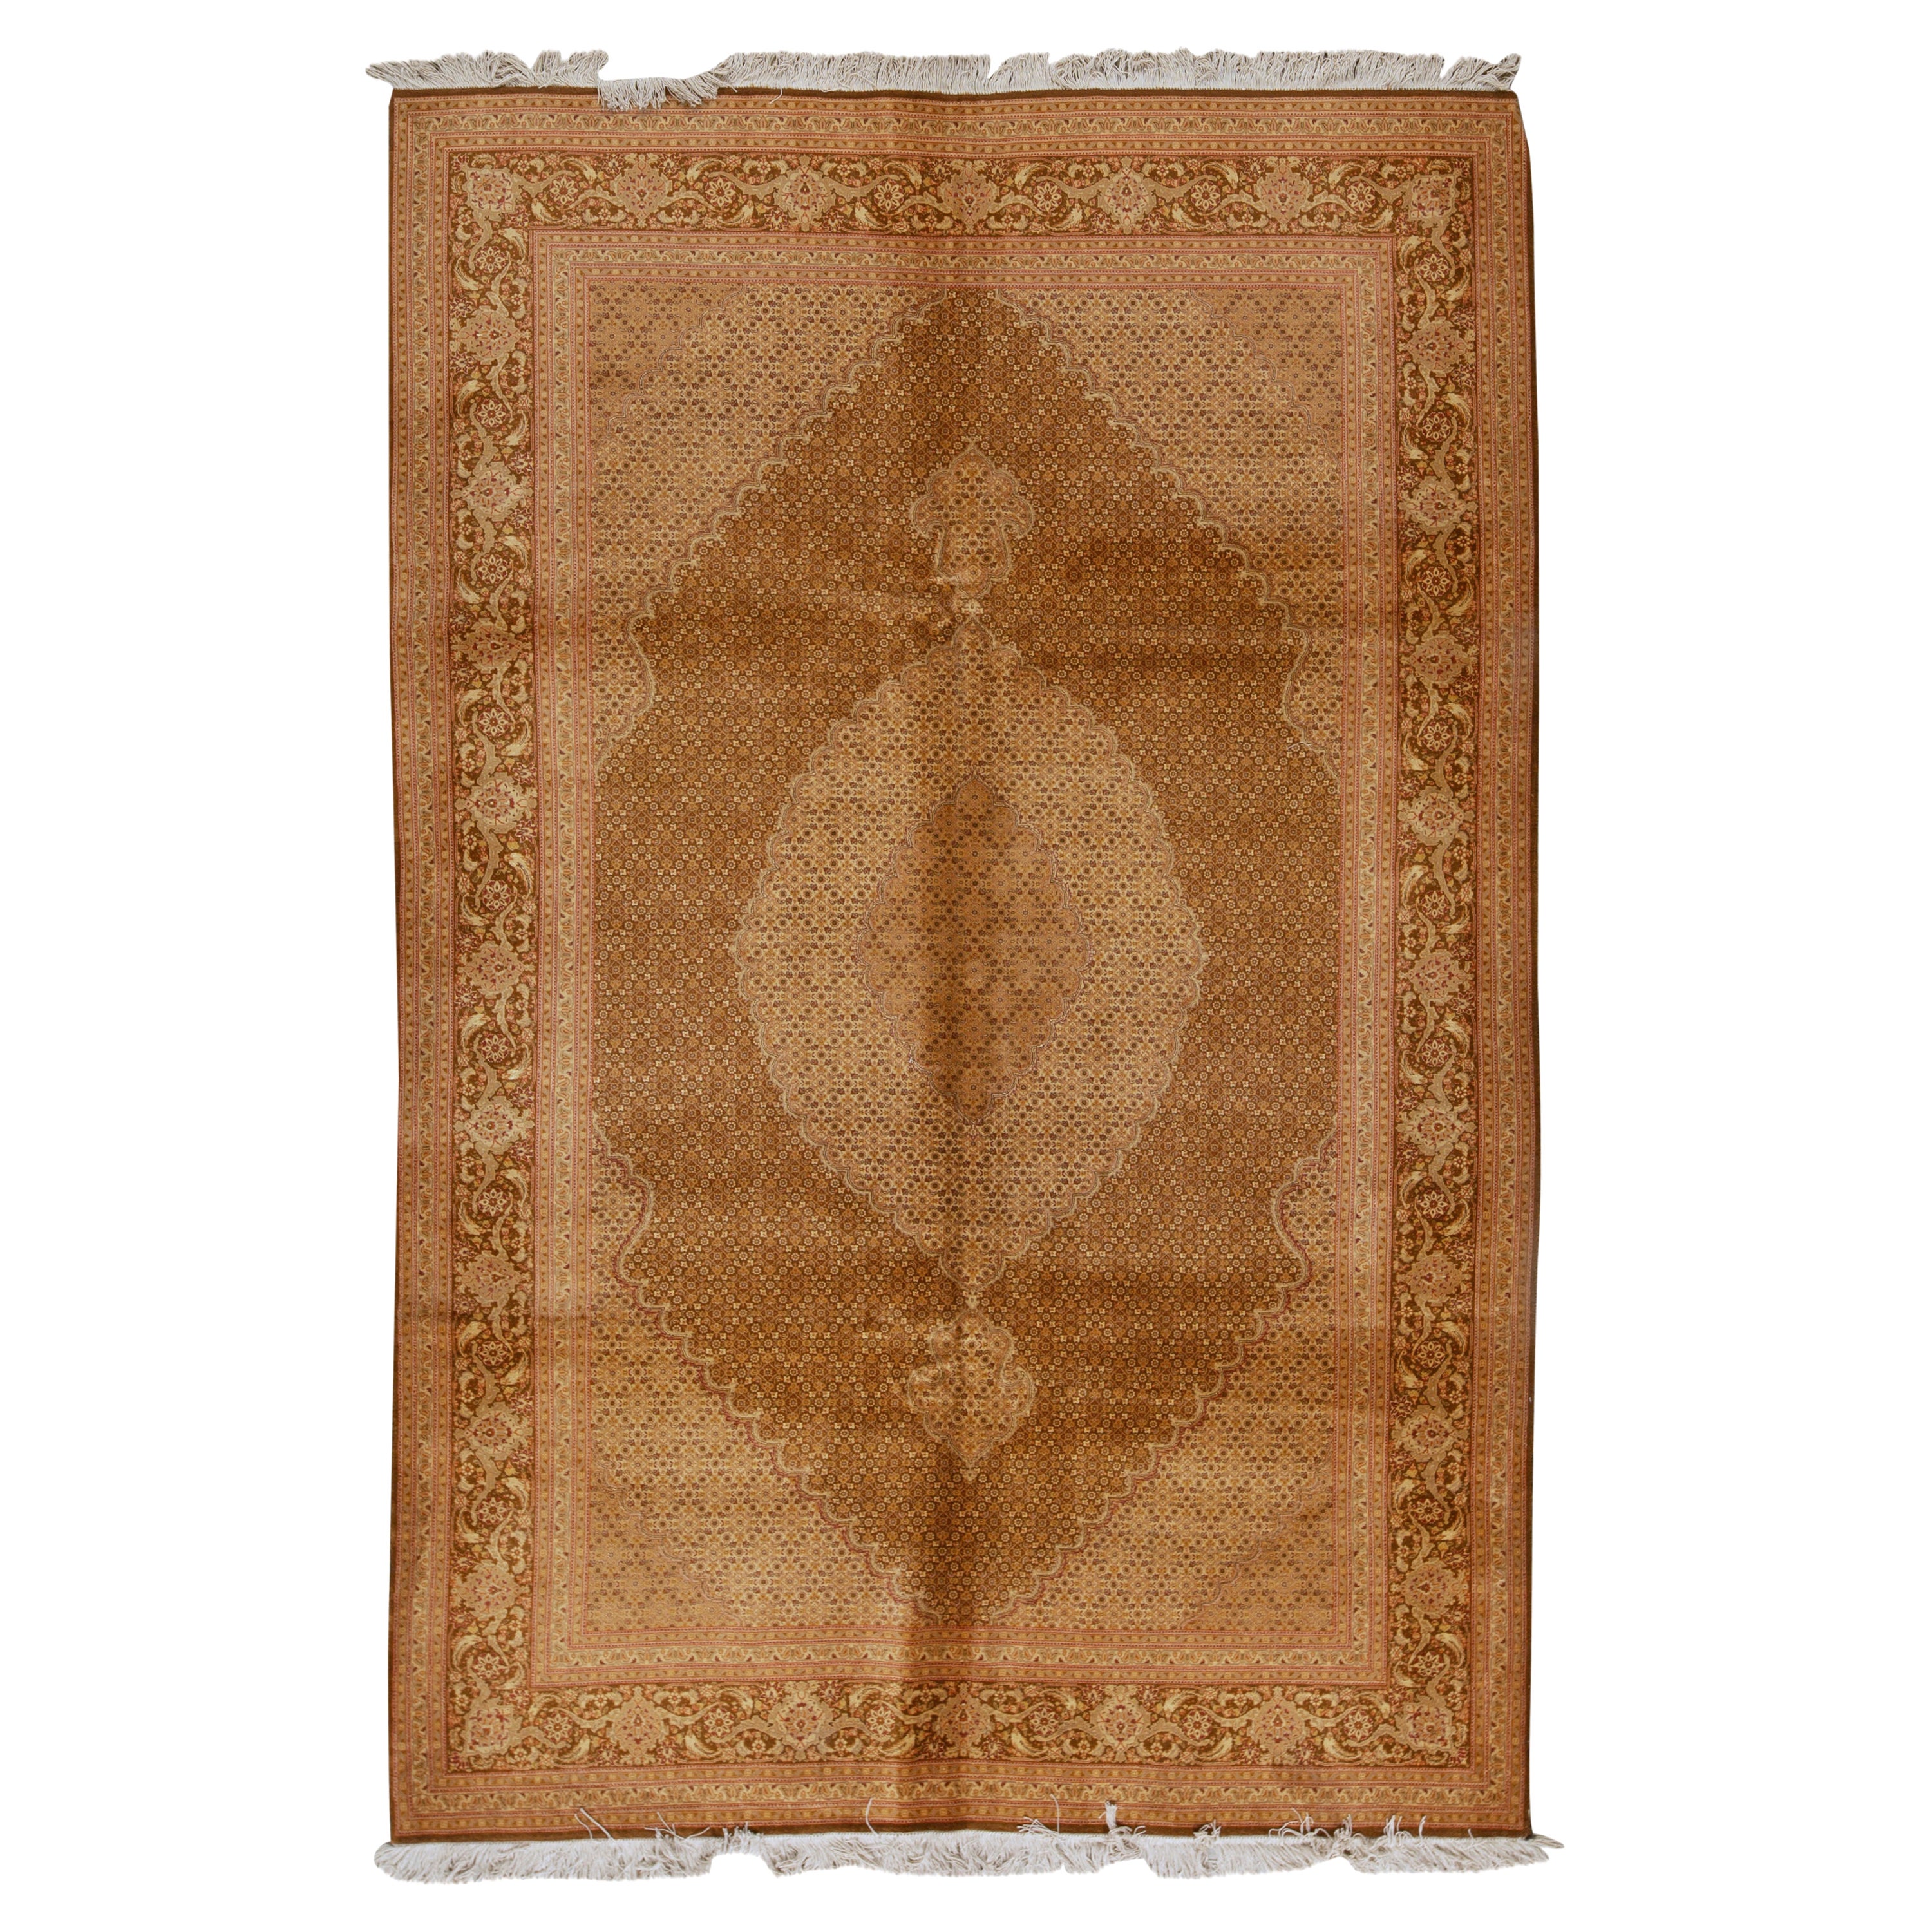 Antique Persian Fine Traditional Handwoven Luxury Wool Brown / Beige Rug